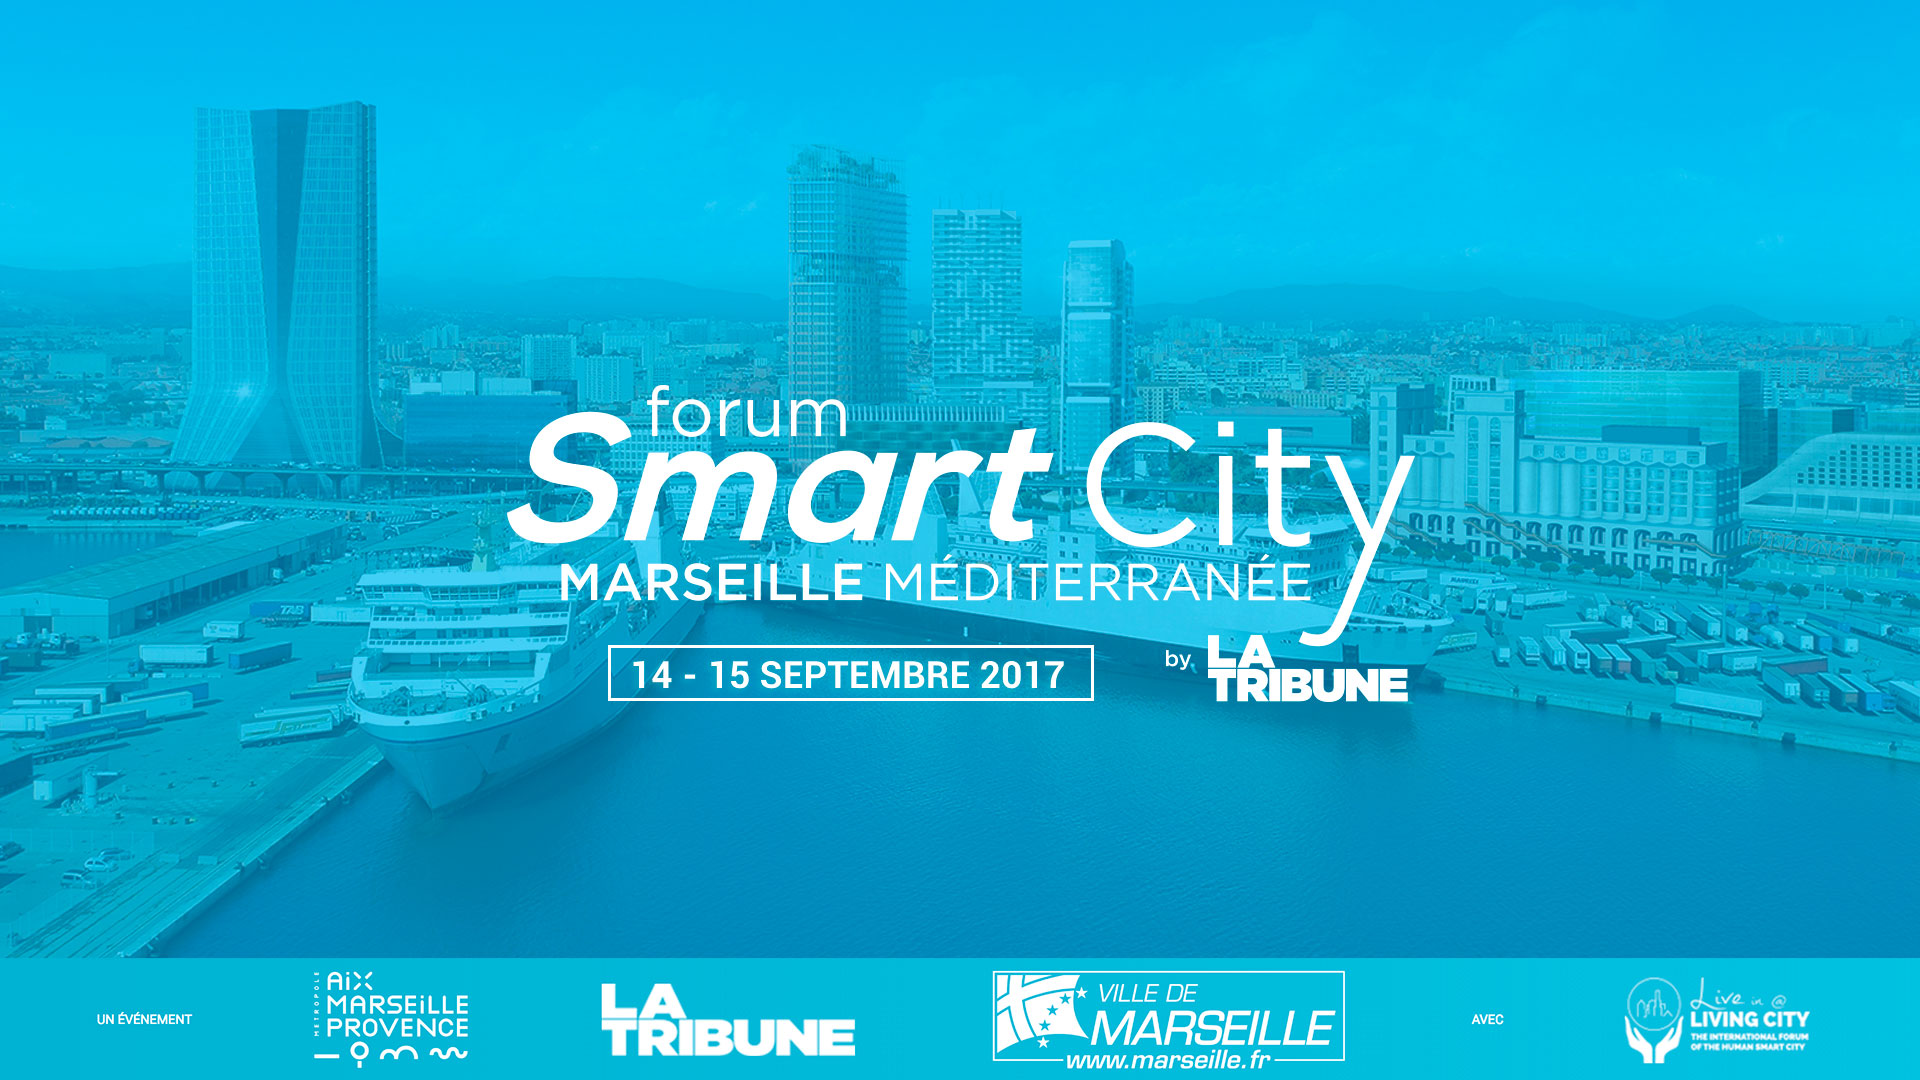 Forum Smart City Marseille